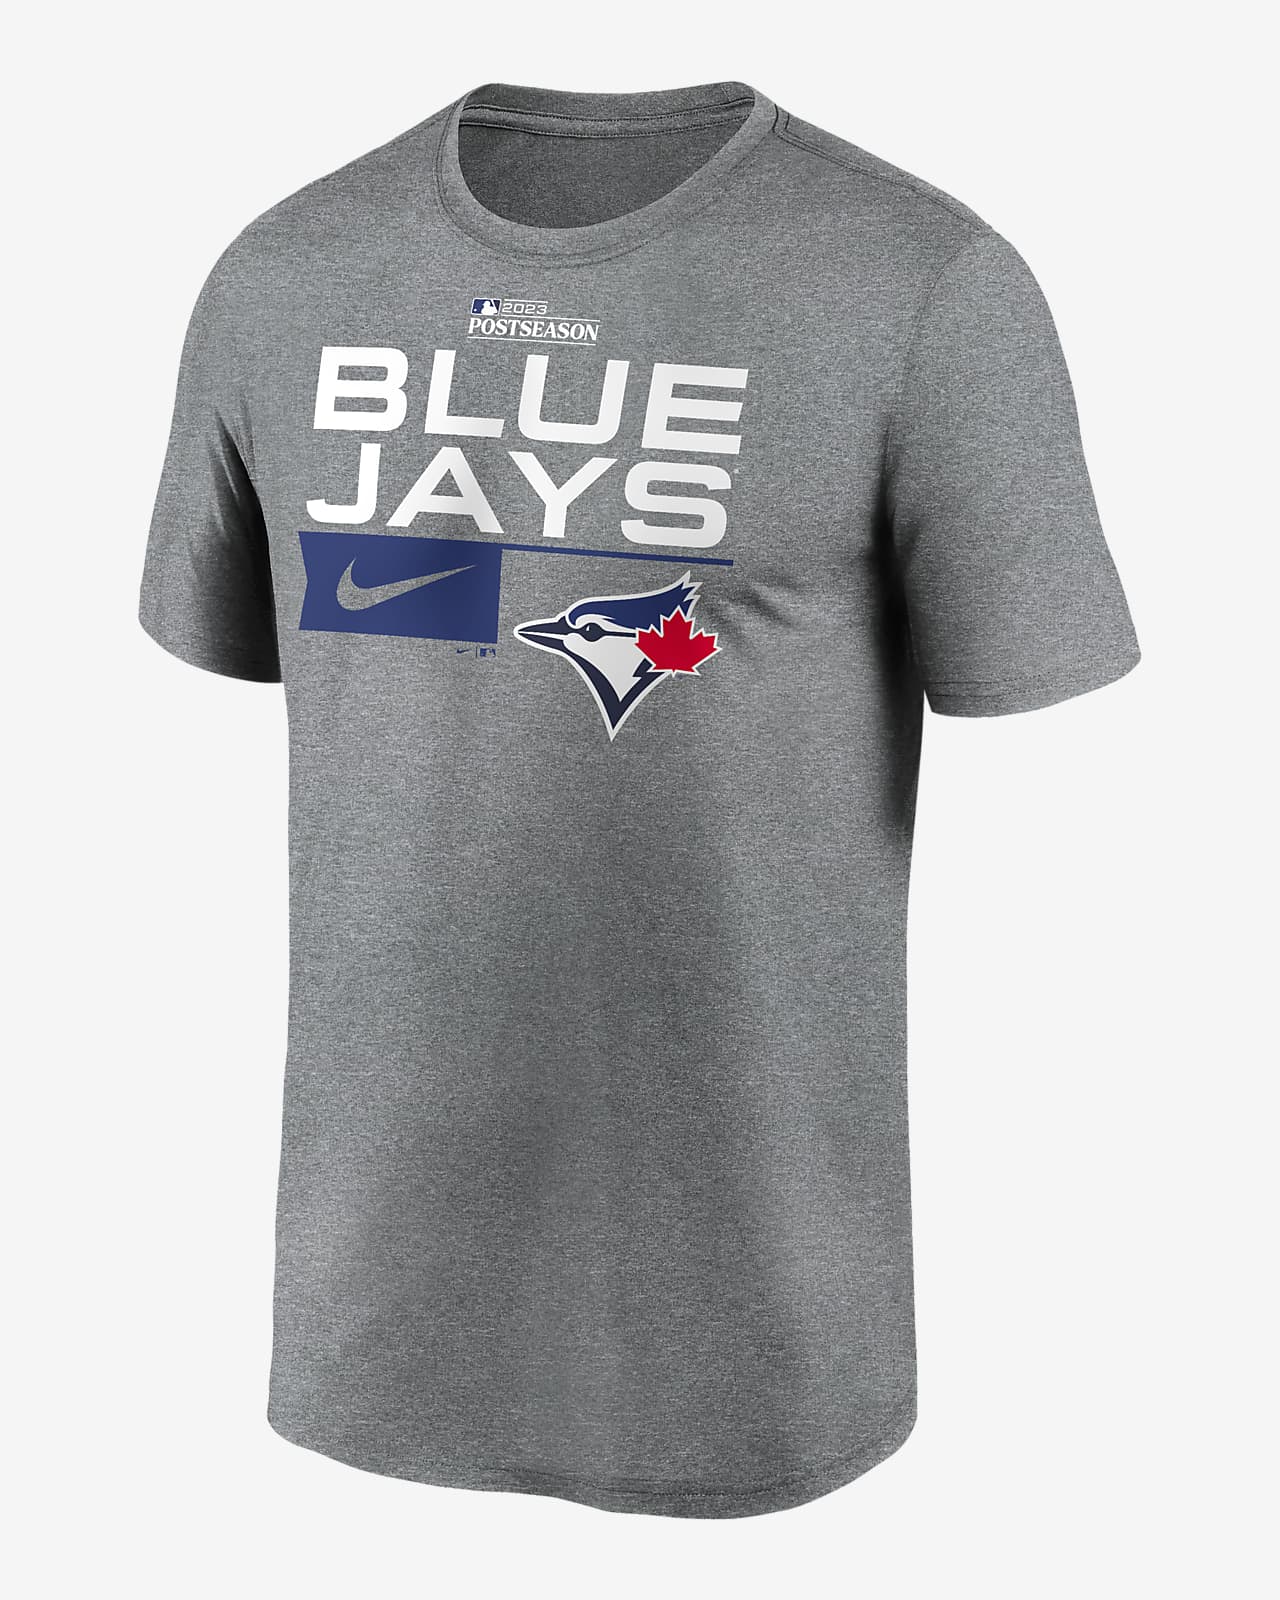 blue jays playoff shirts